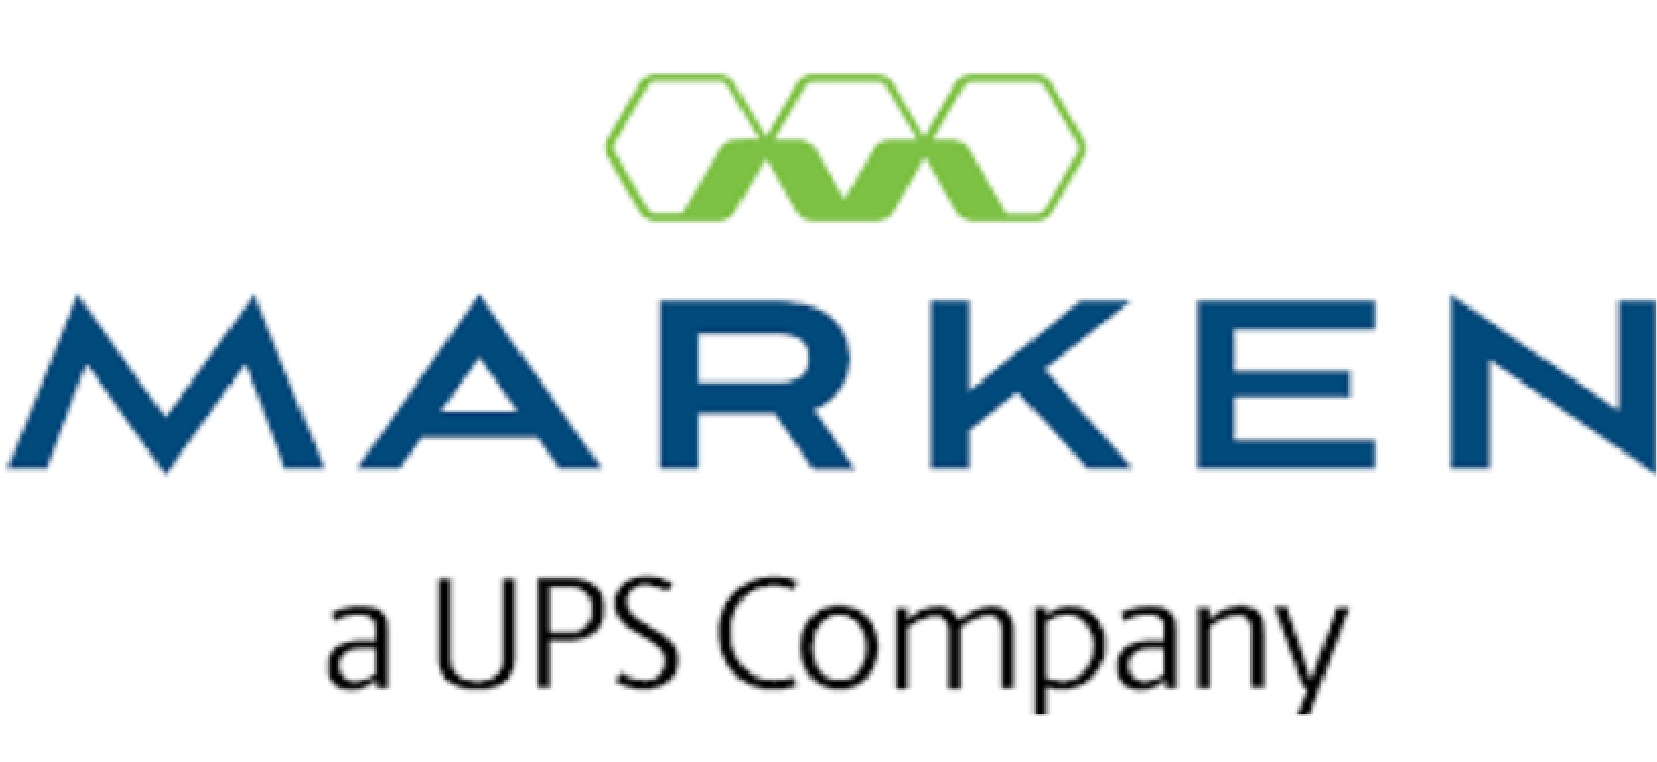 marken logo square green border-1